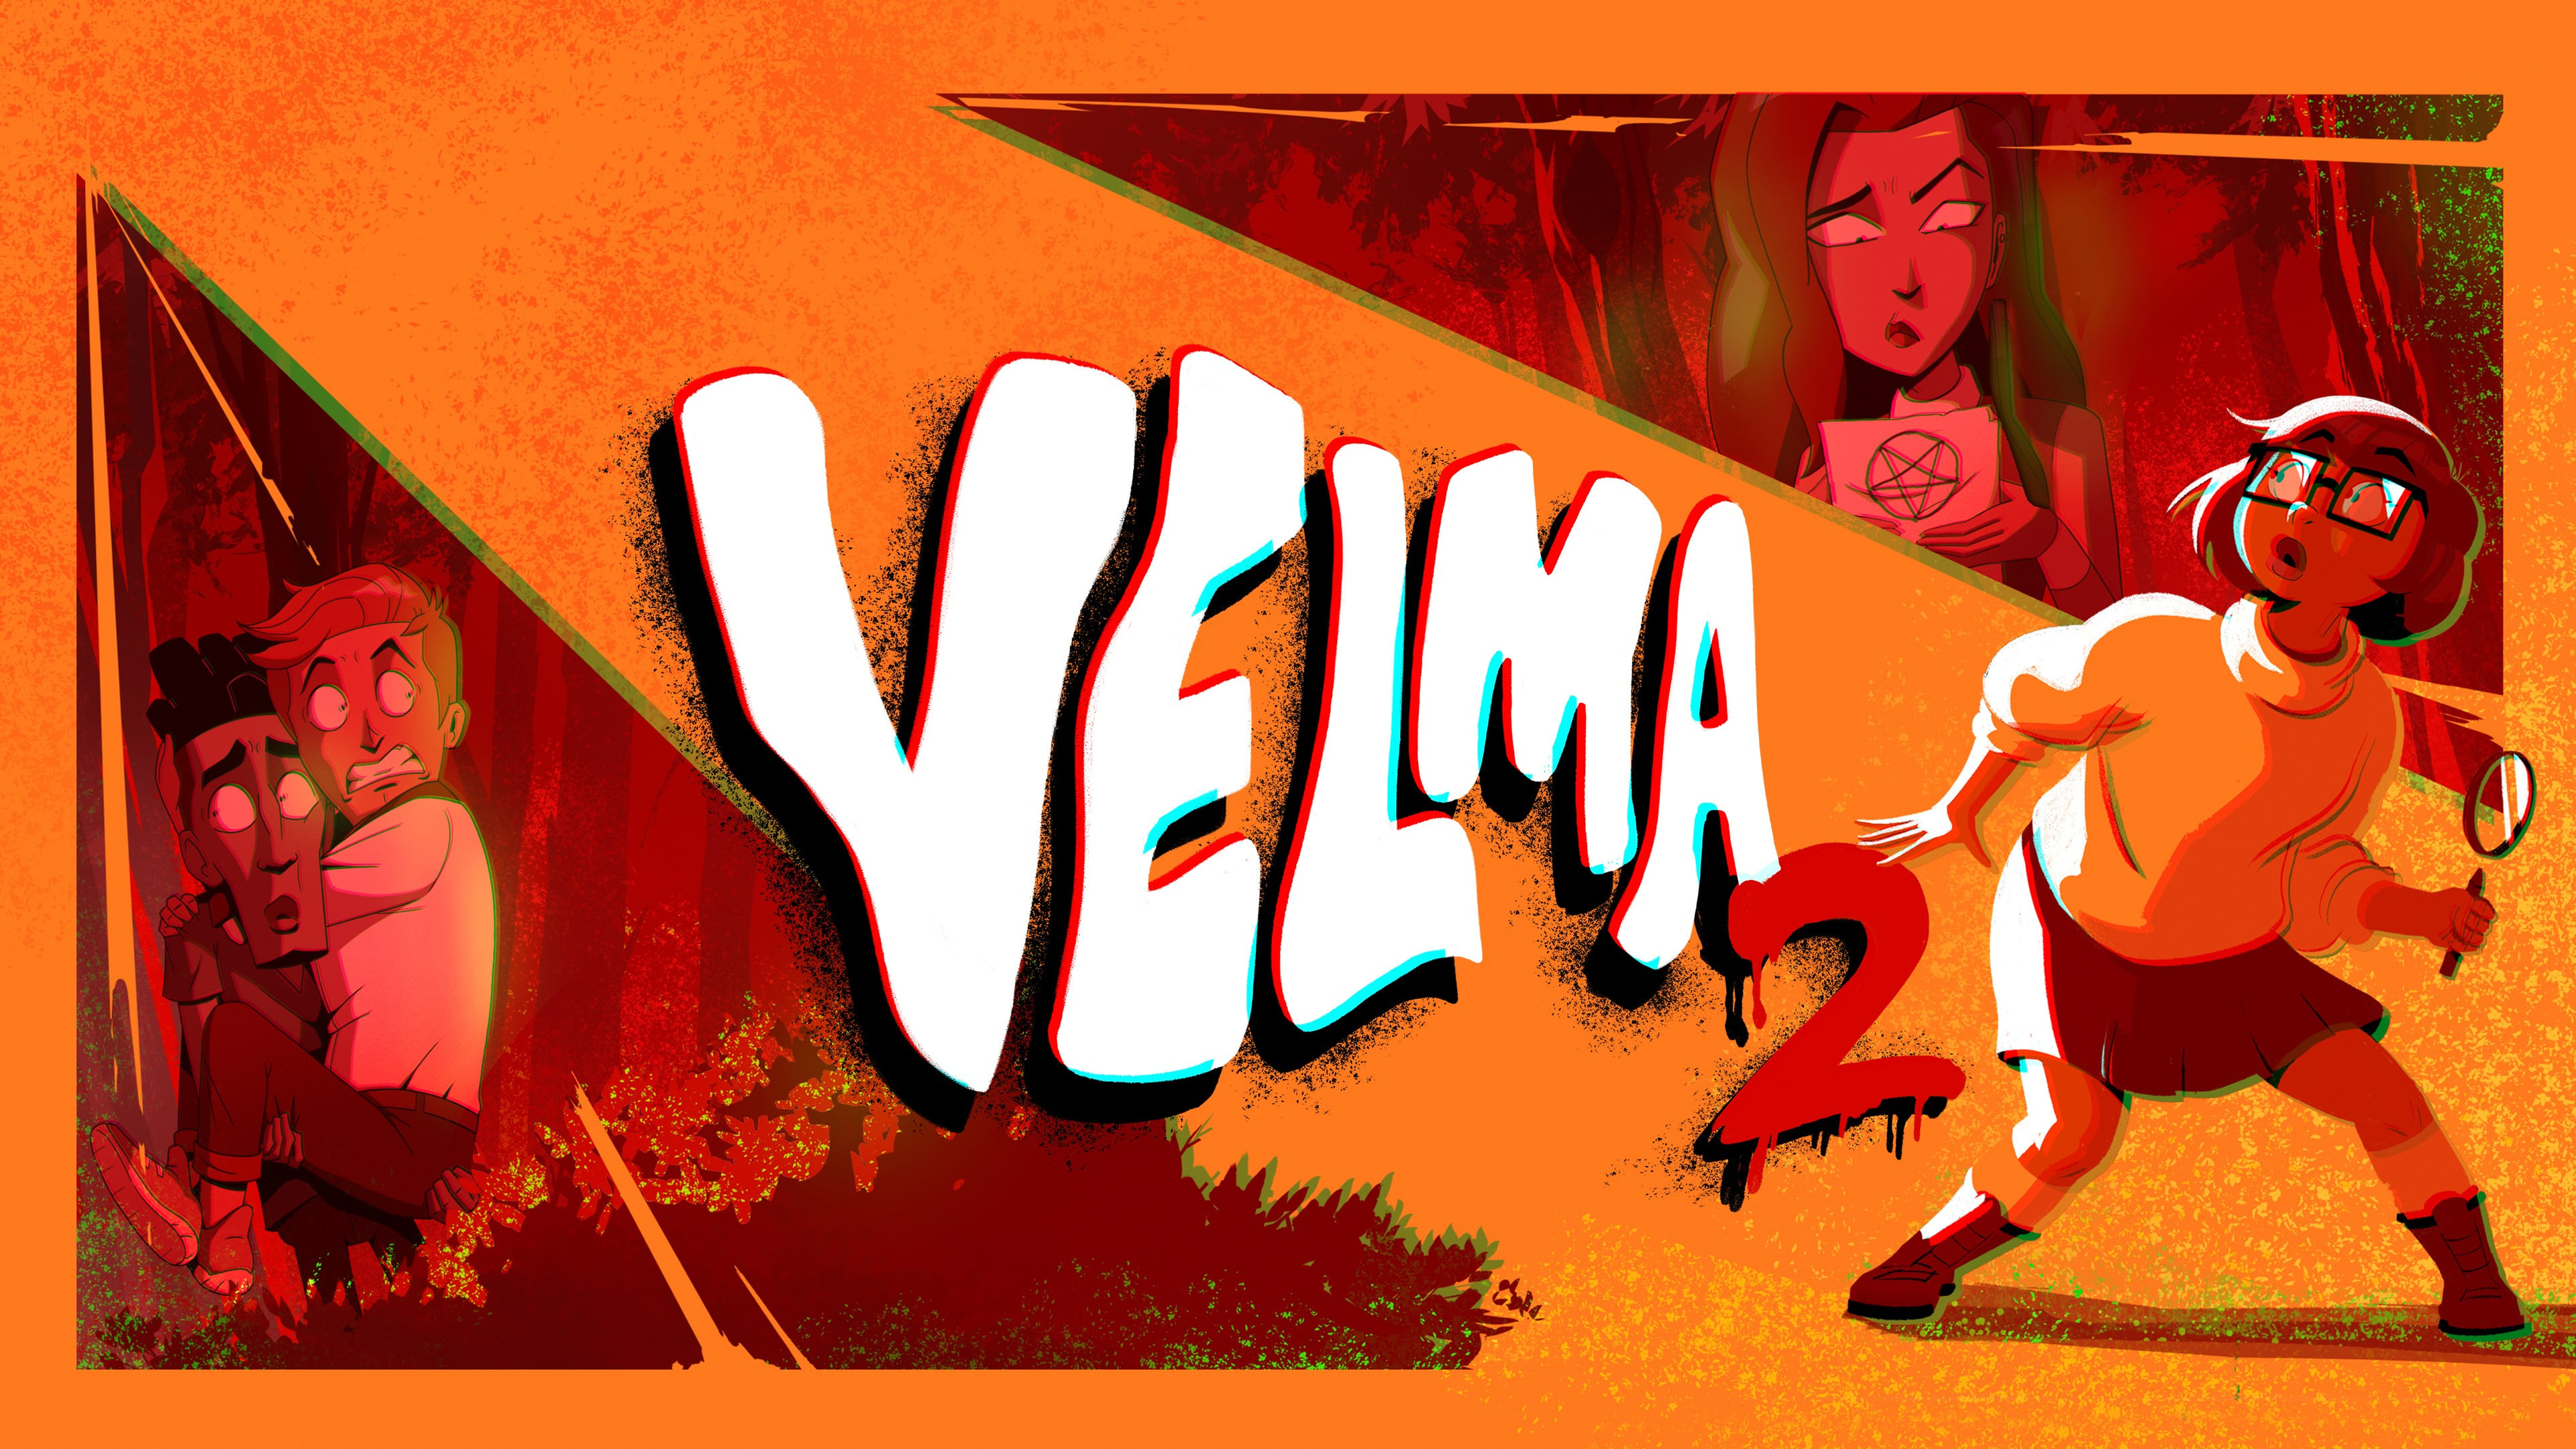 Velma - Season 2 Episode 9